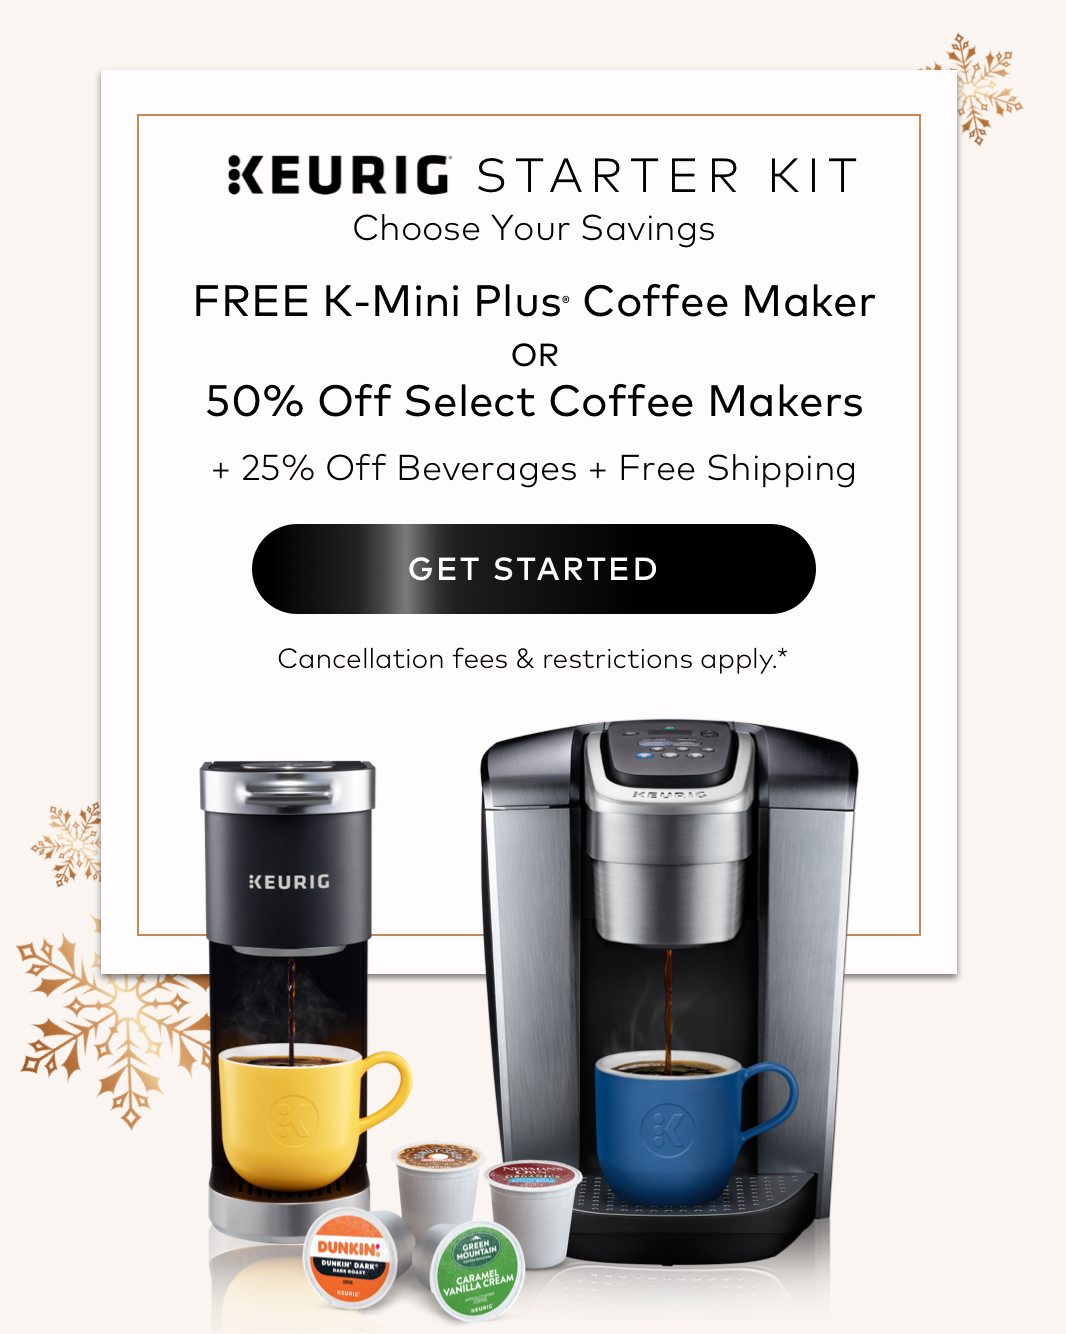 Coffee maker and beverage savings with Keurig Starter Kit